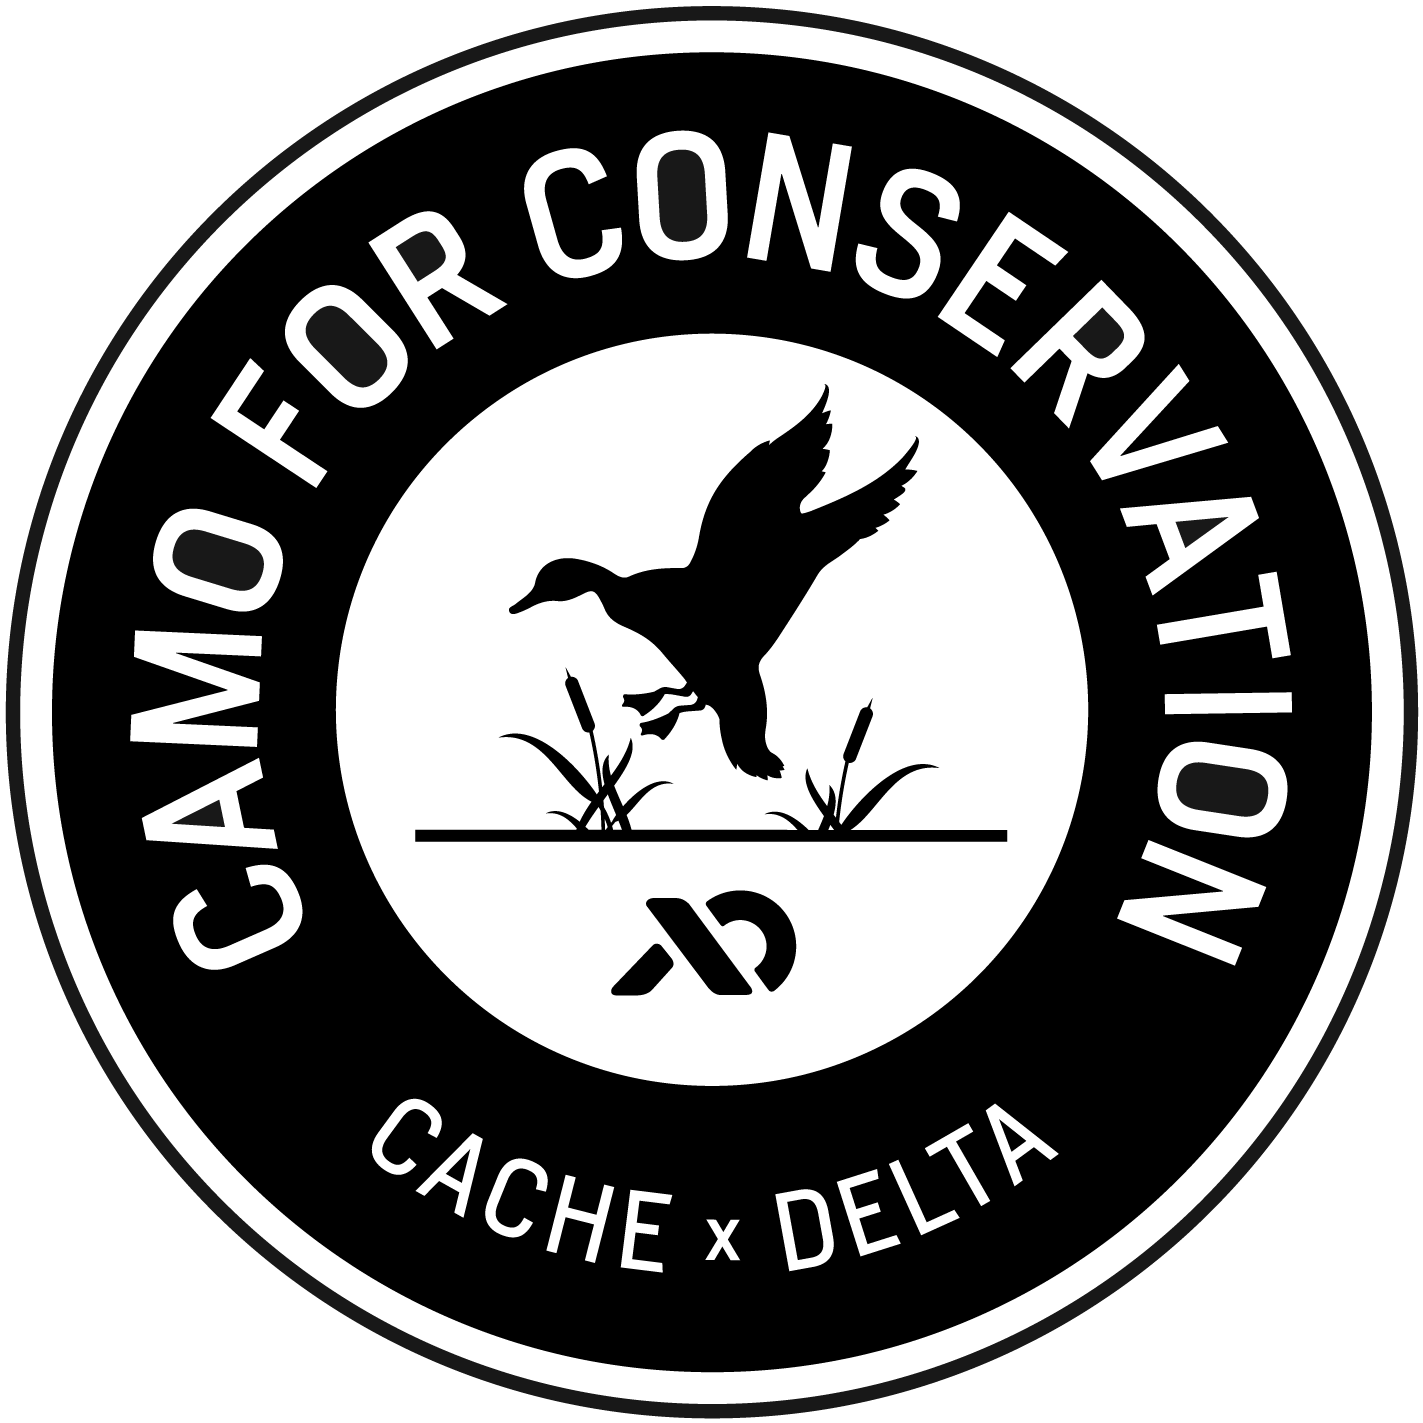 C4C_CachexDelta_Badge